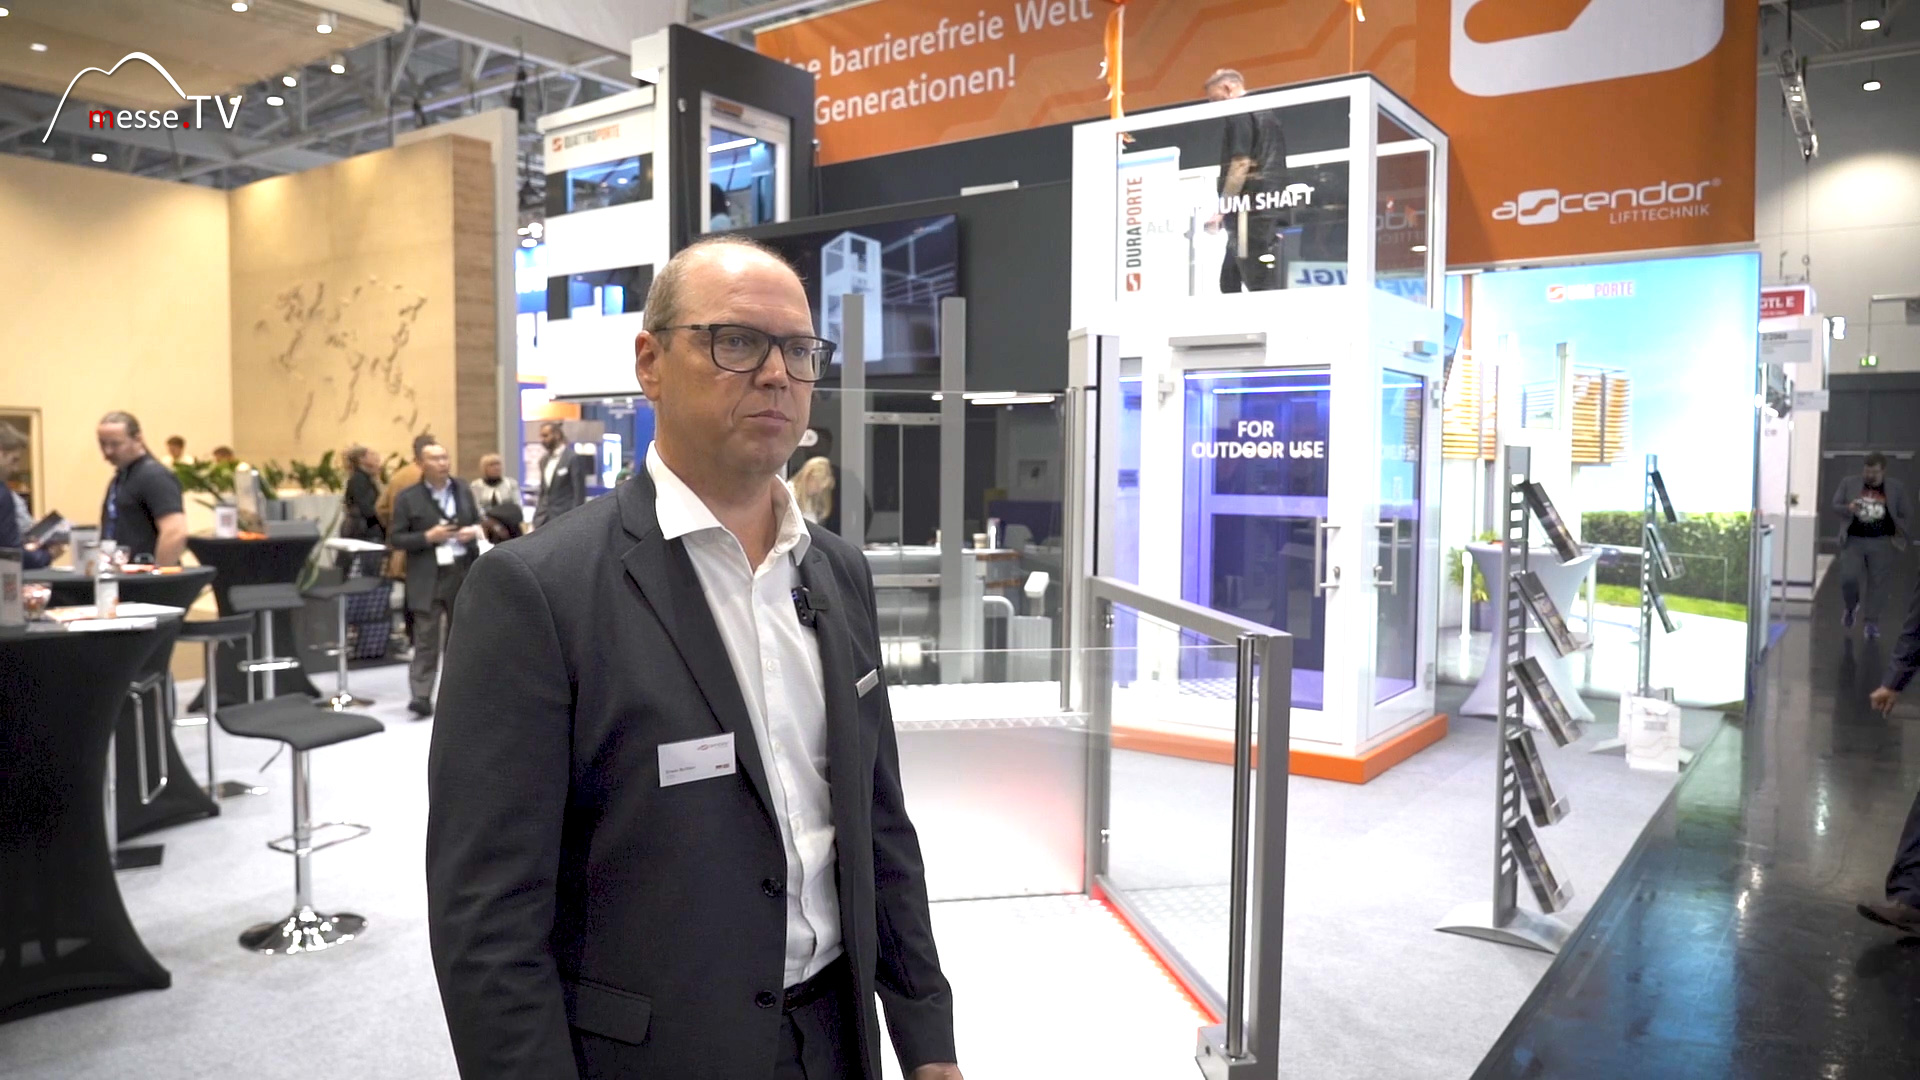 MesseTV interview Erwin Roither managing director ascendor elevator technology interlift 2023 Augsburg